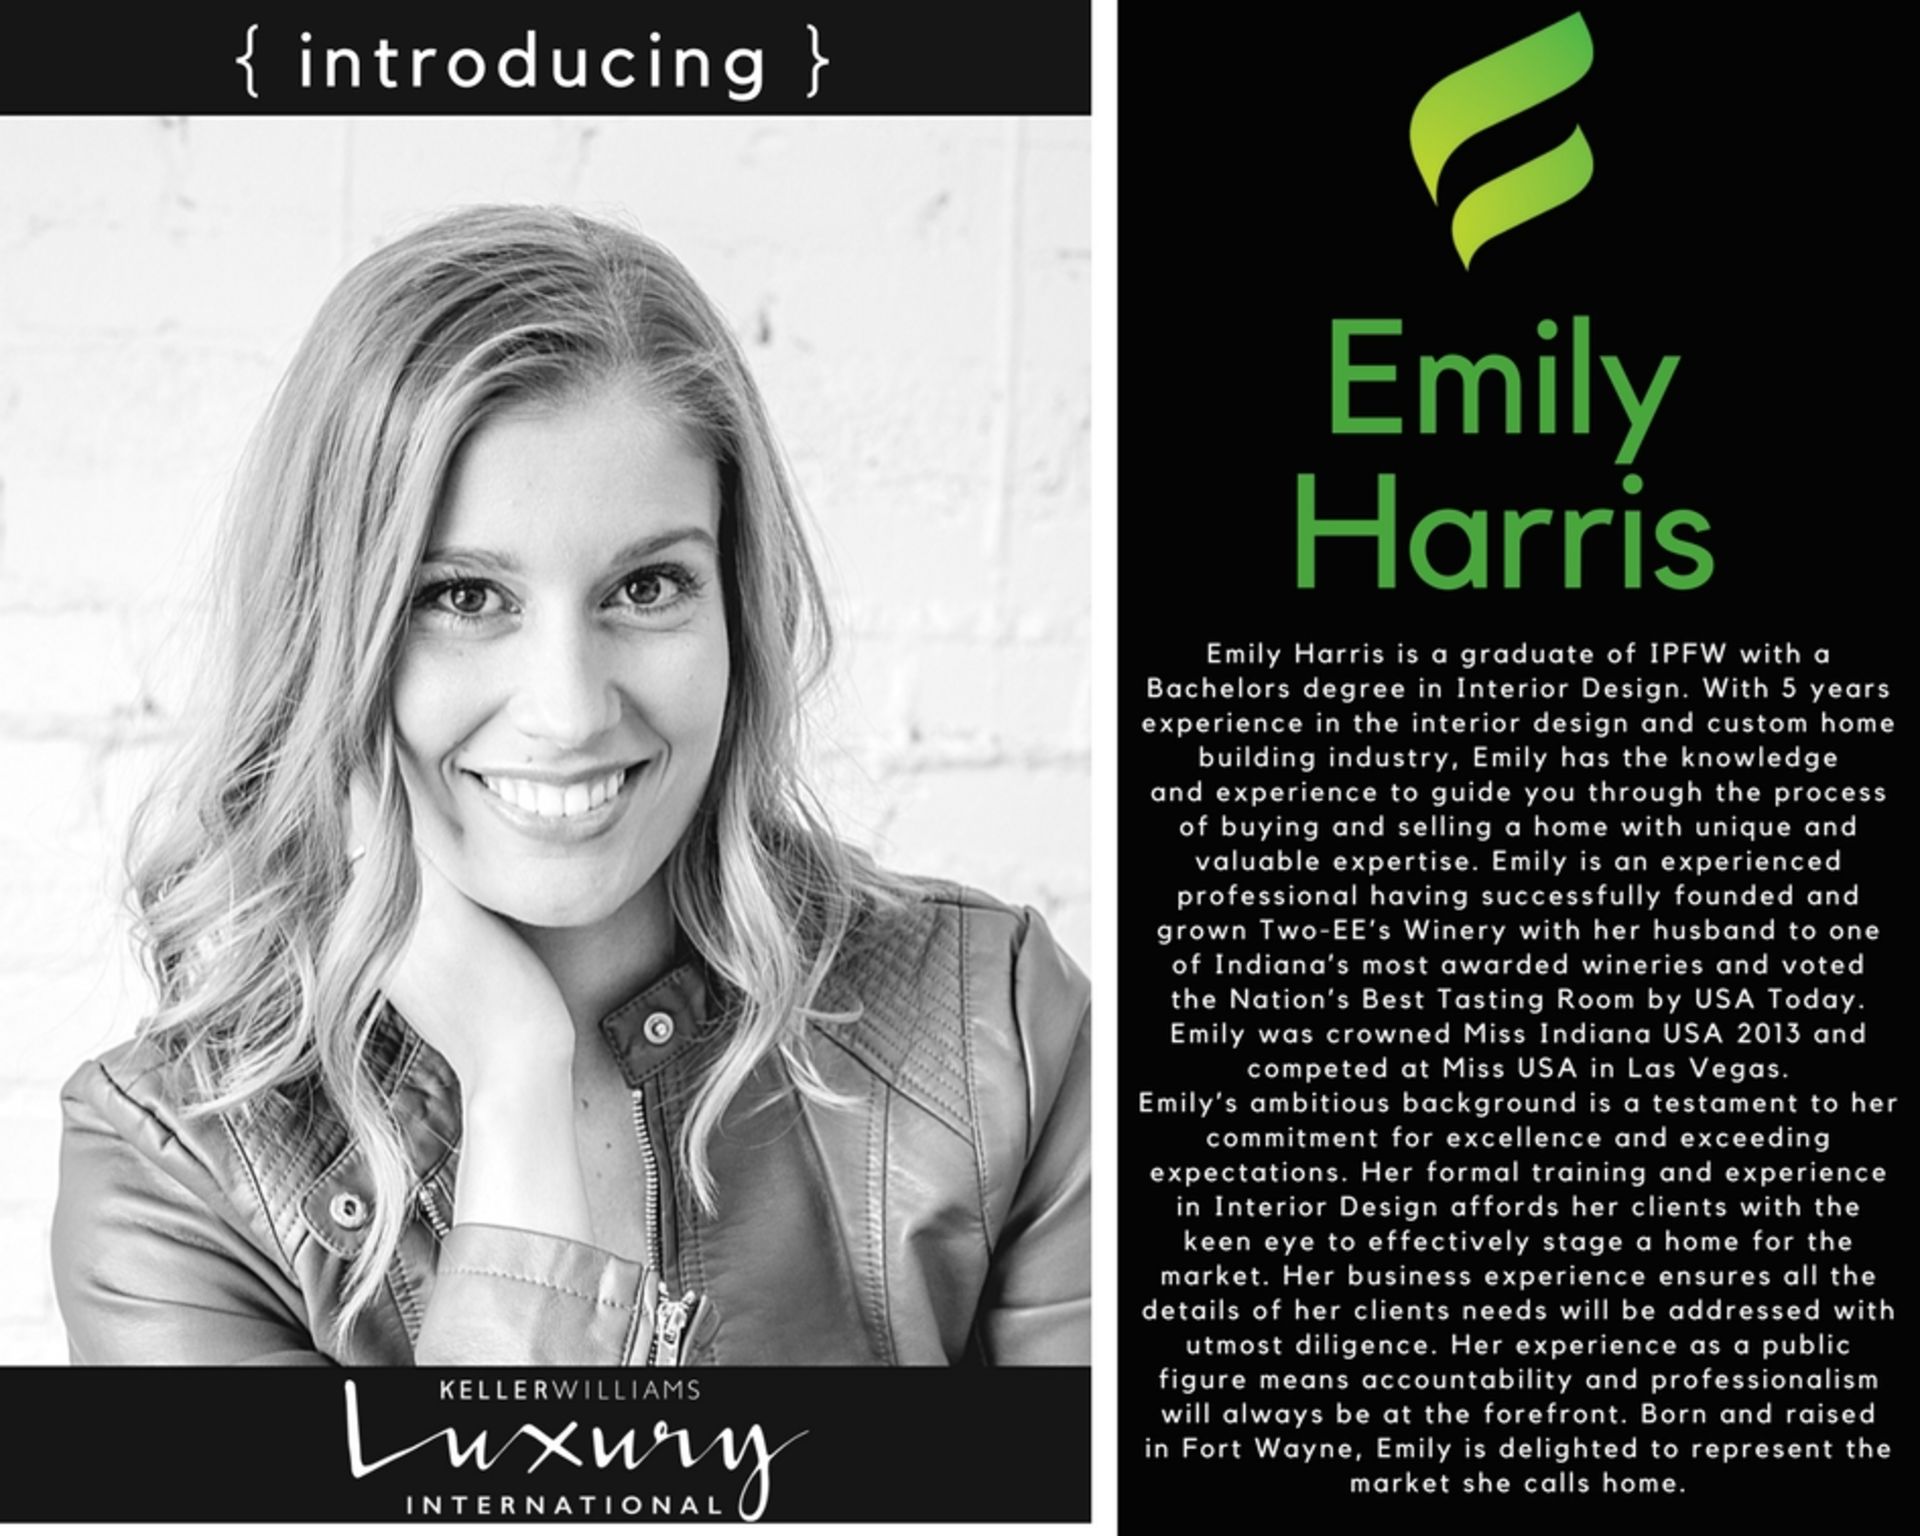 Introducing Emily Harris!